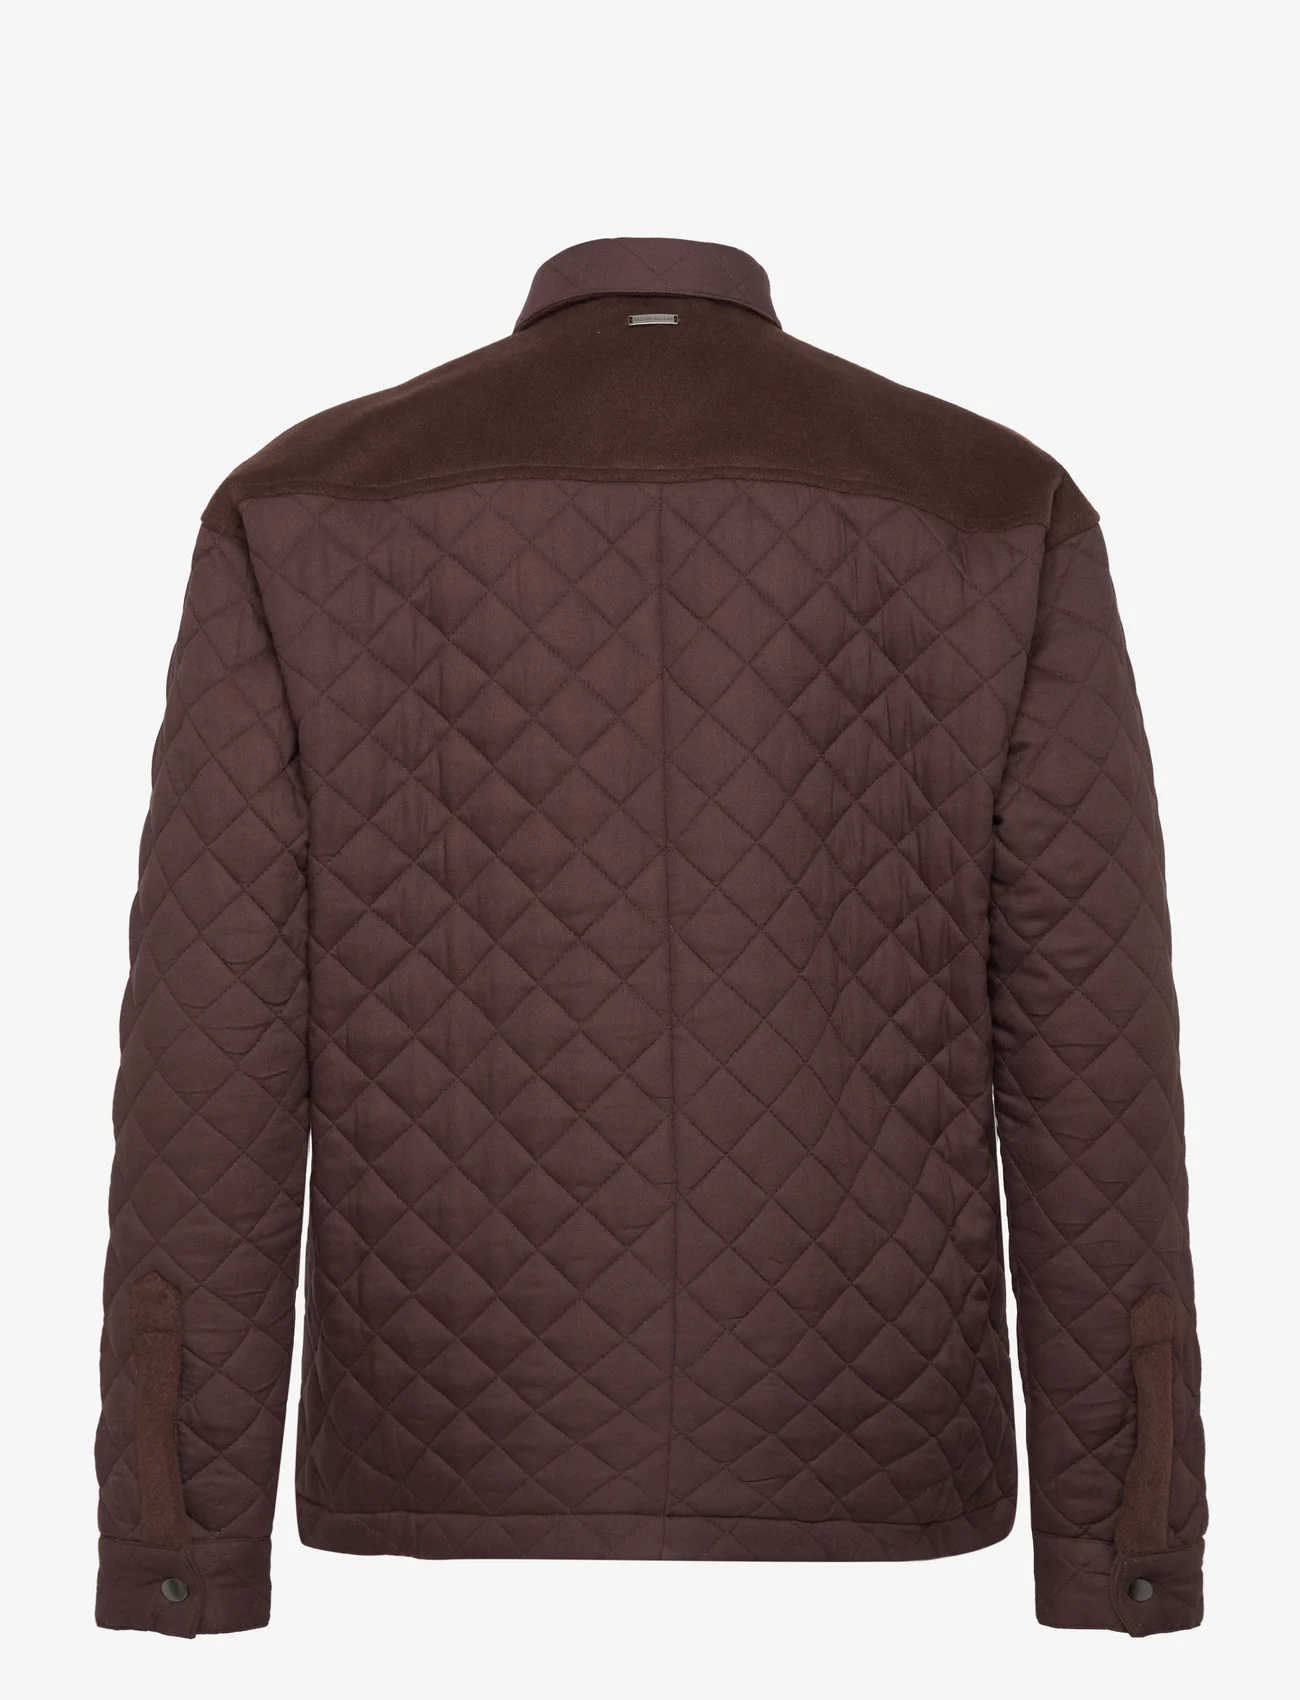 Bruuns Bazaar - Quilt Elmo jacket - lentejassen - demitasse - 1